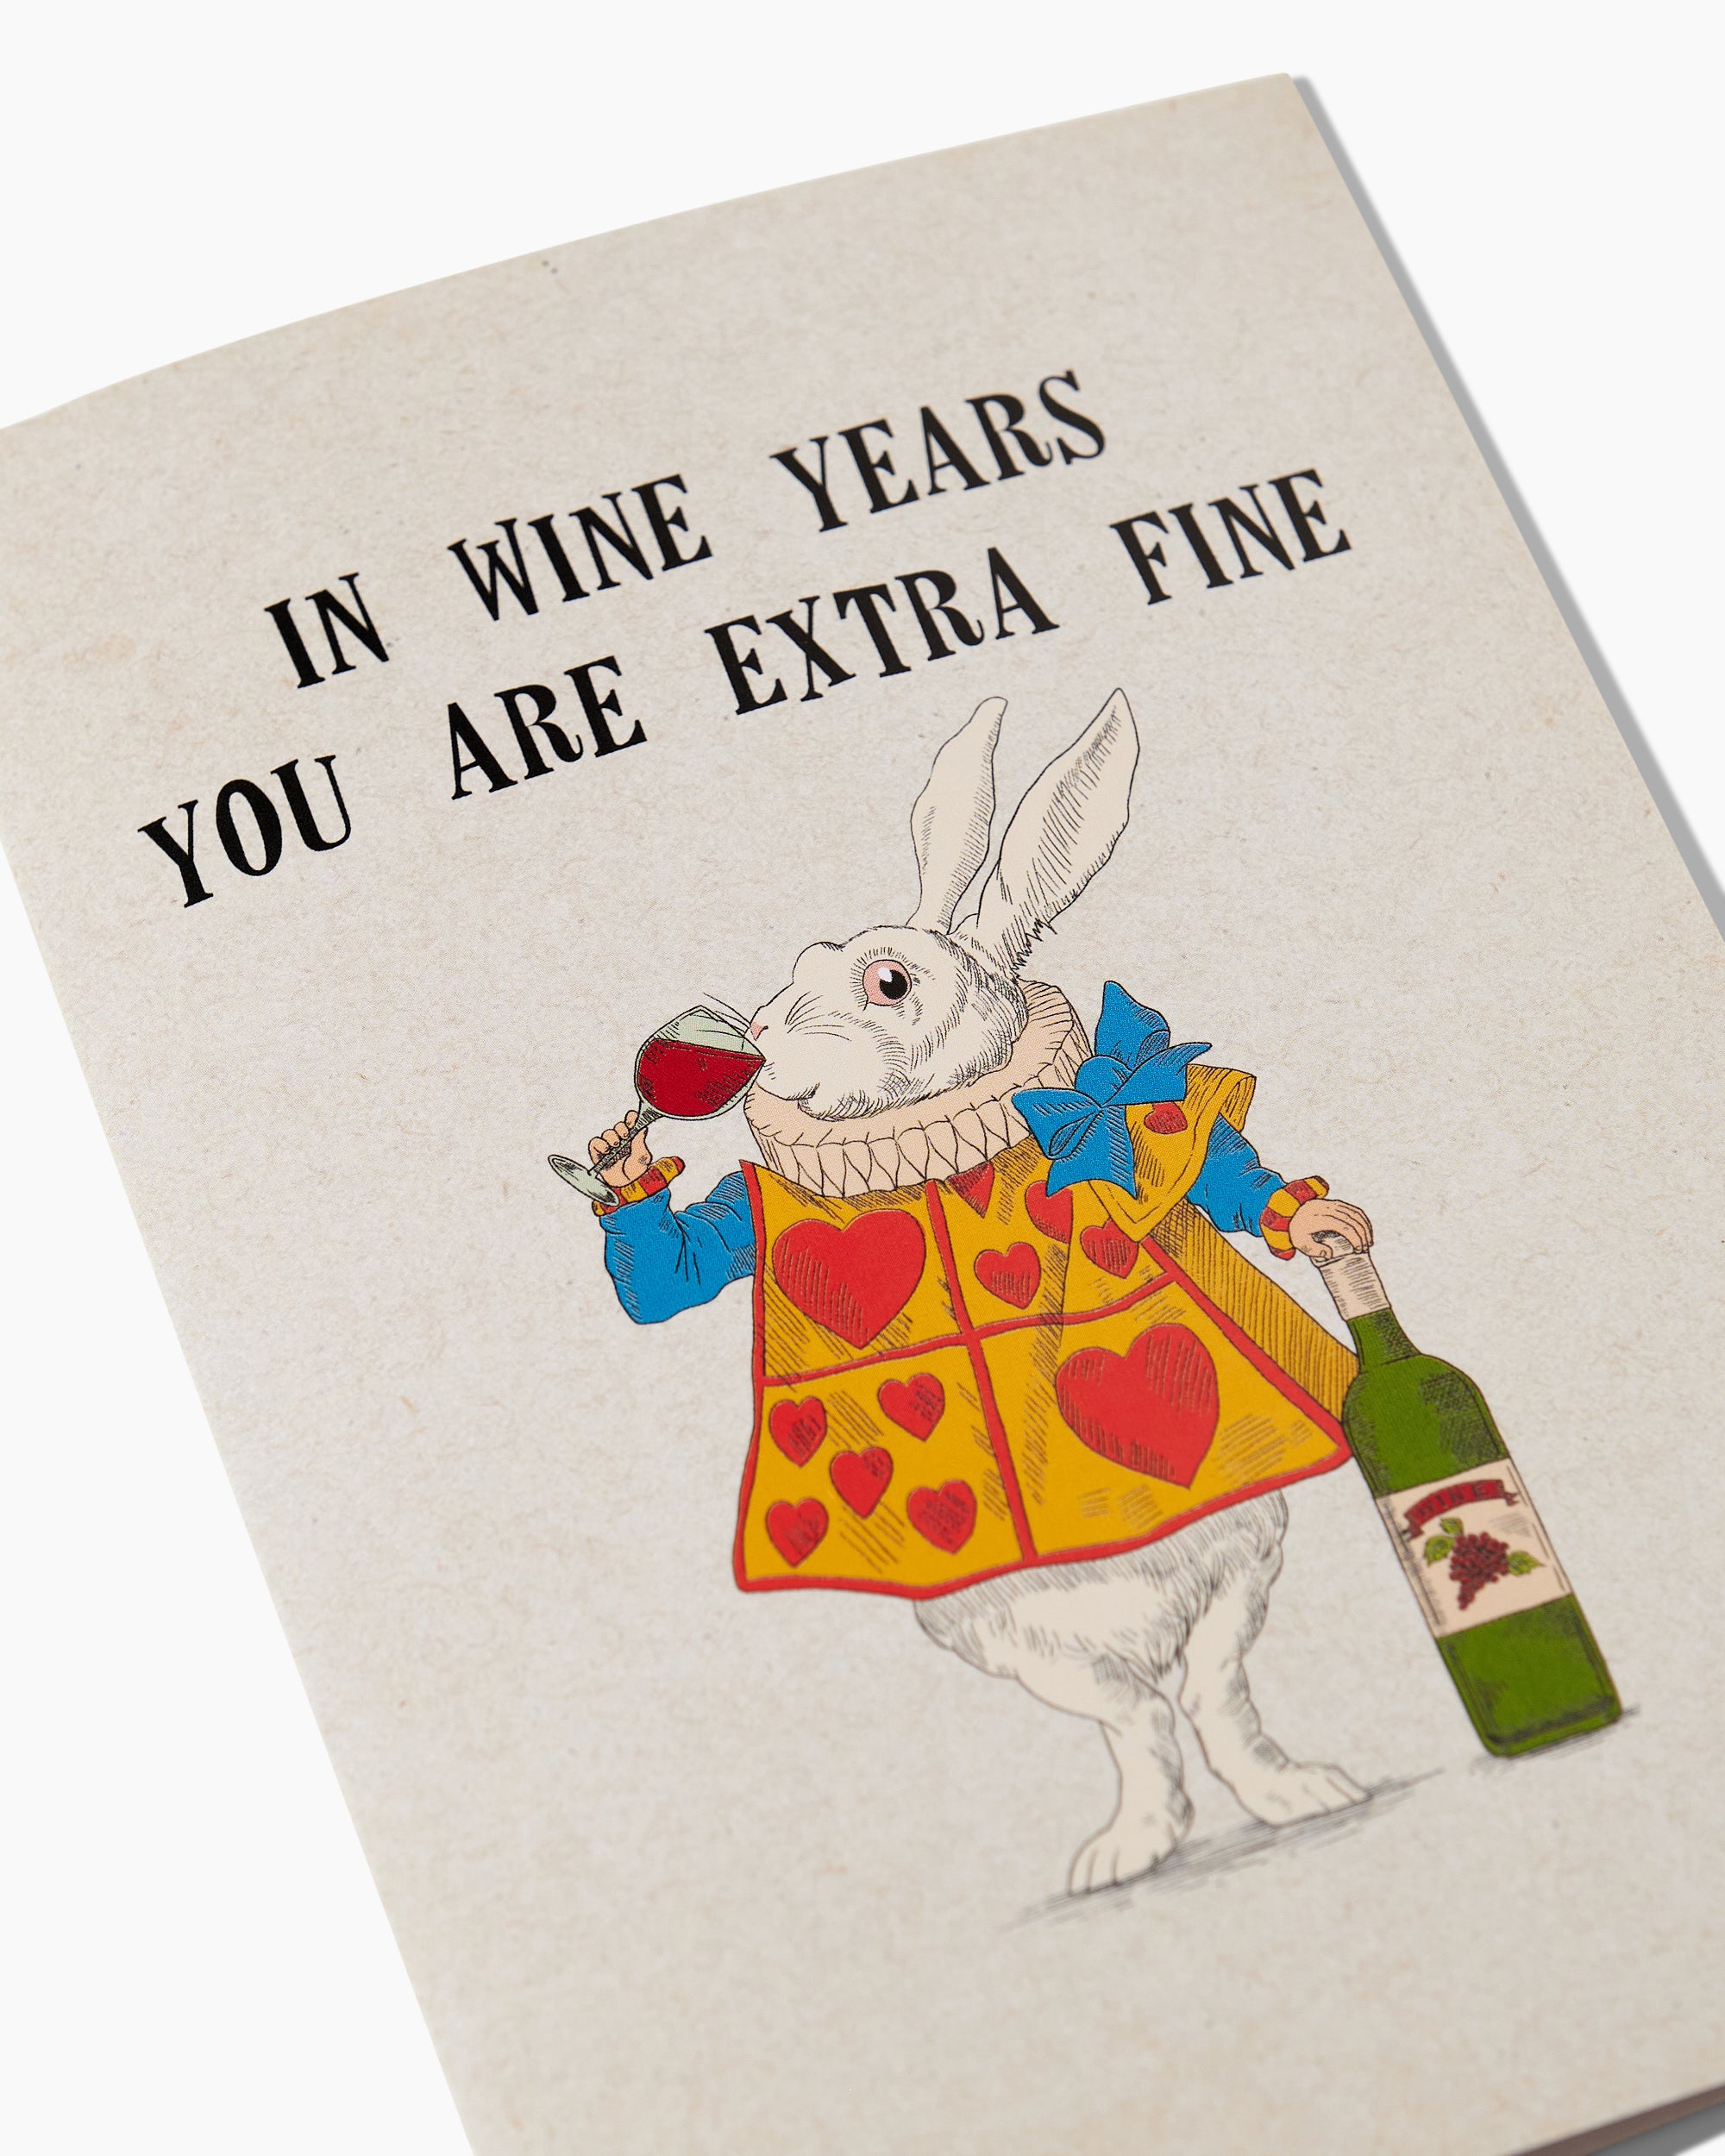 In Wine Years Greeting Card Australia Online